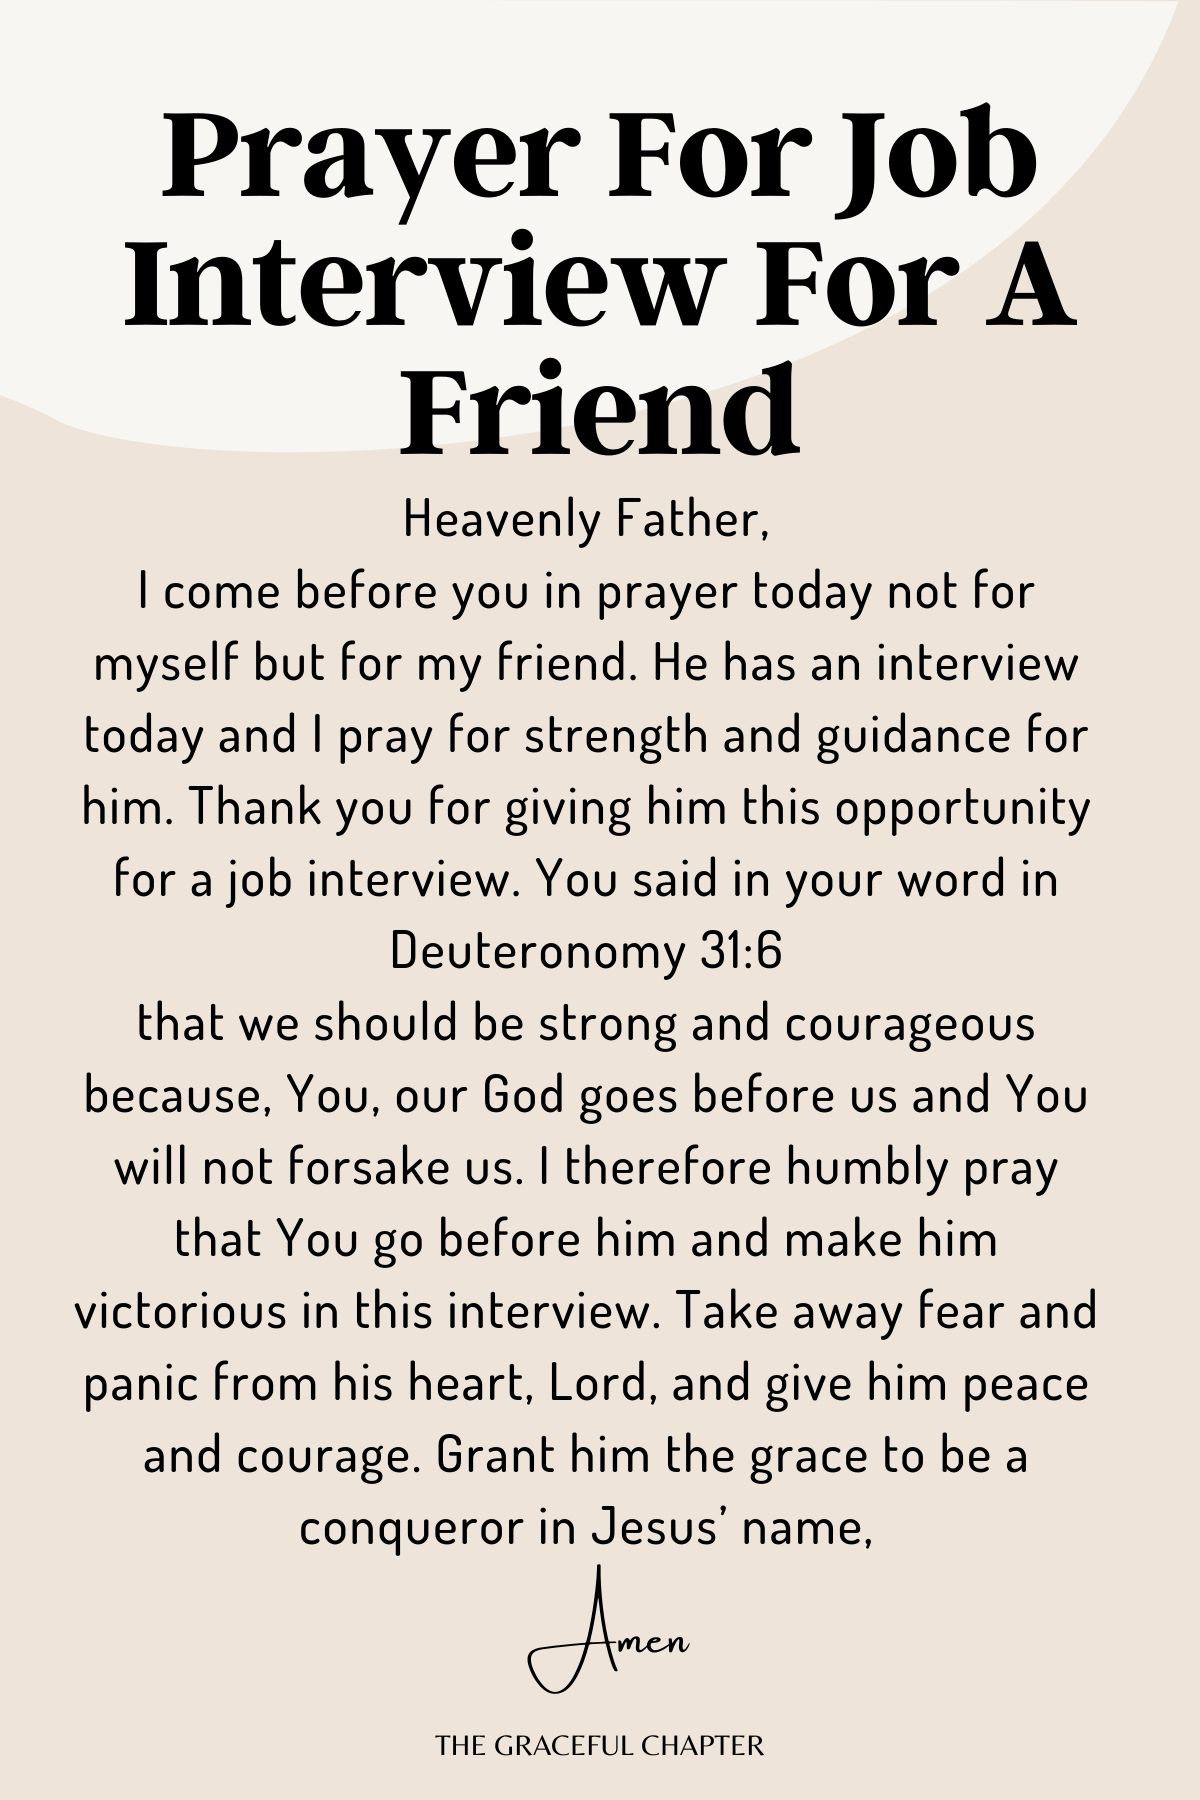 Prayer for job interview for a friend